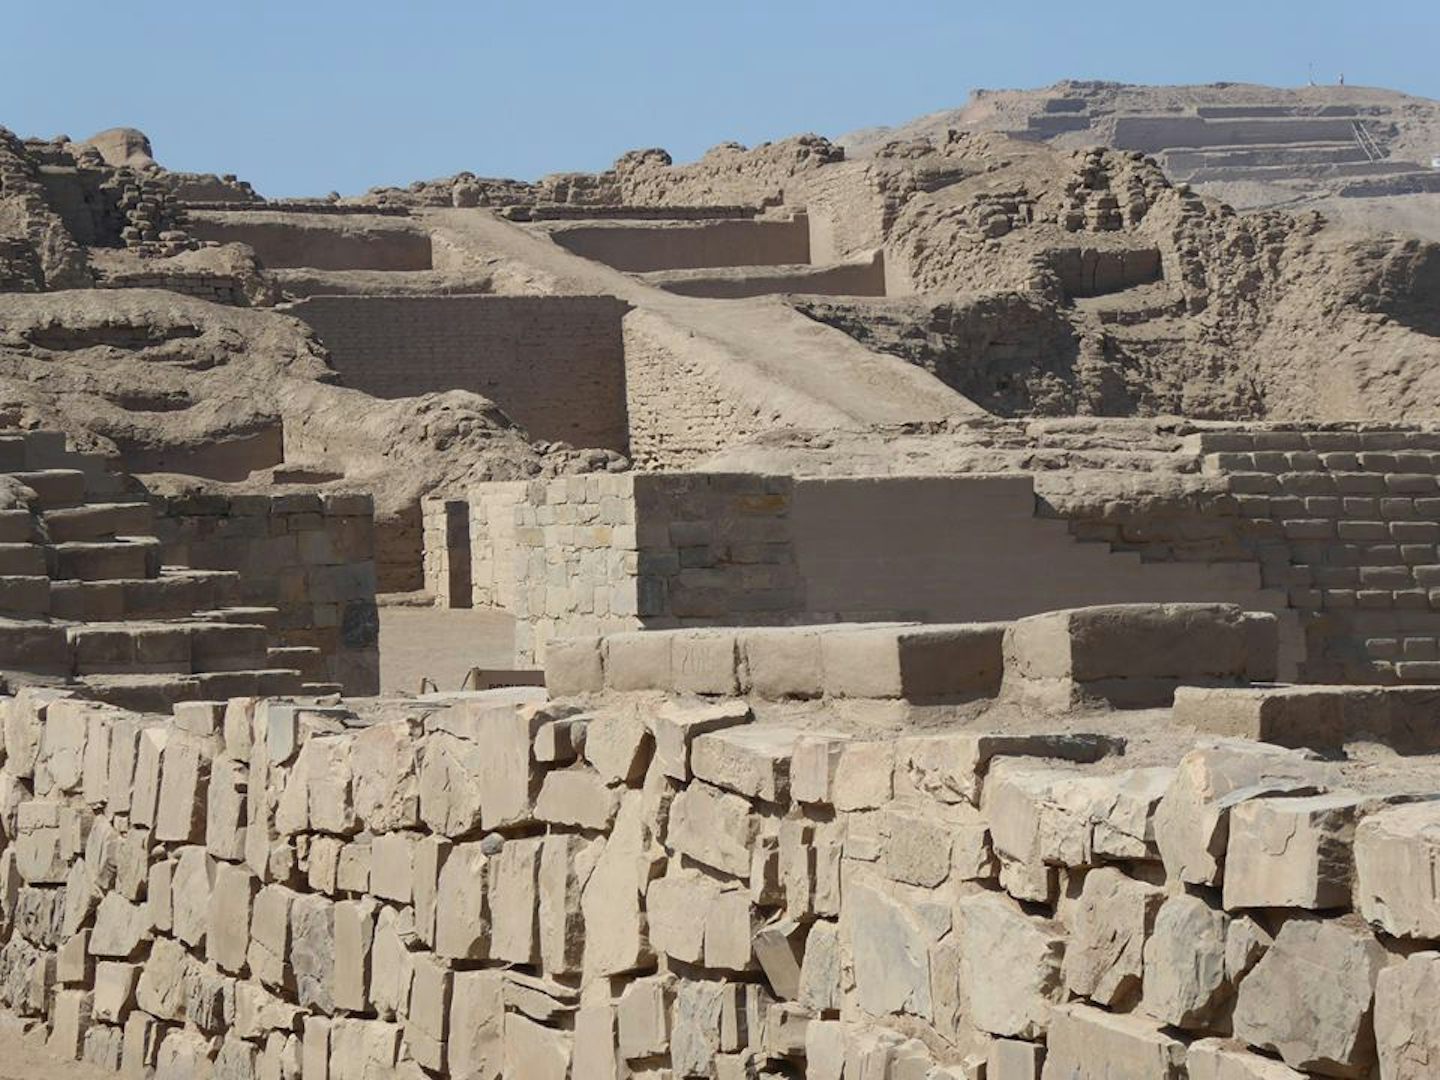 Pachacamac ruins dating back to 300 AD. Lima, Peru